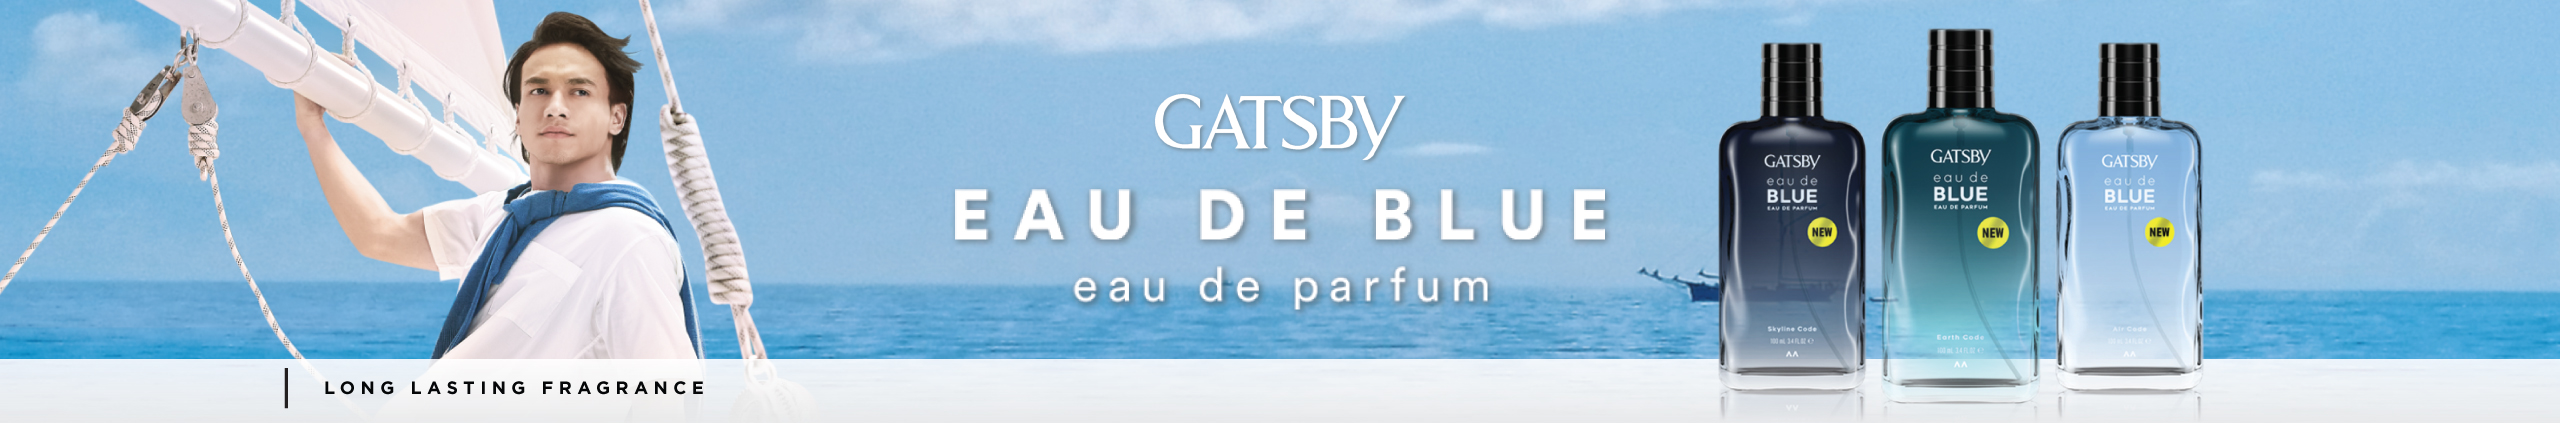 Eau De Blue  - Gatsby